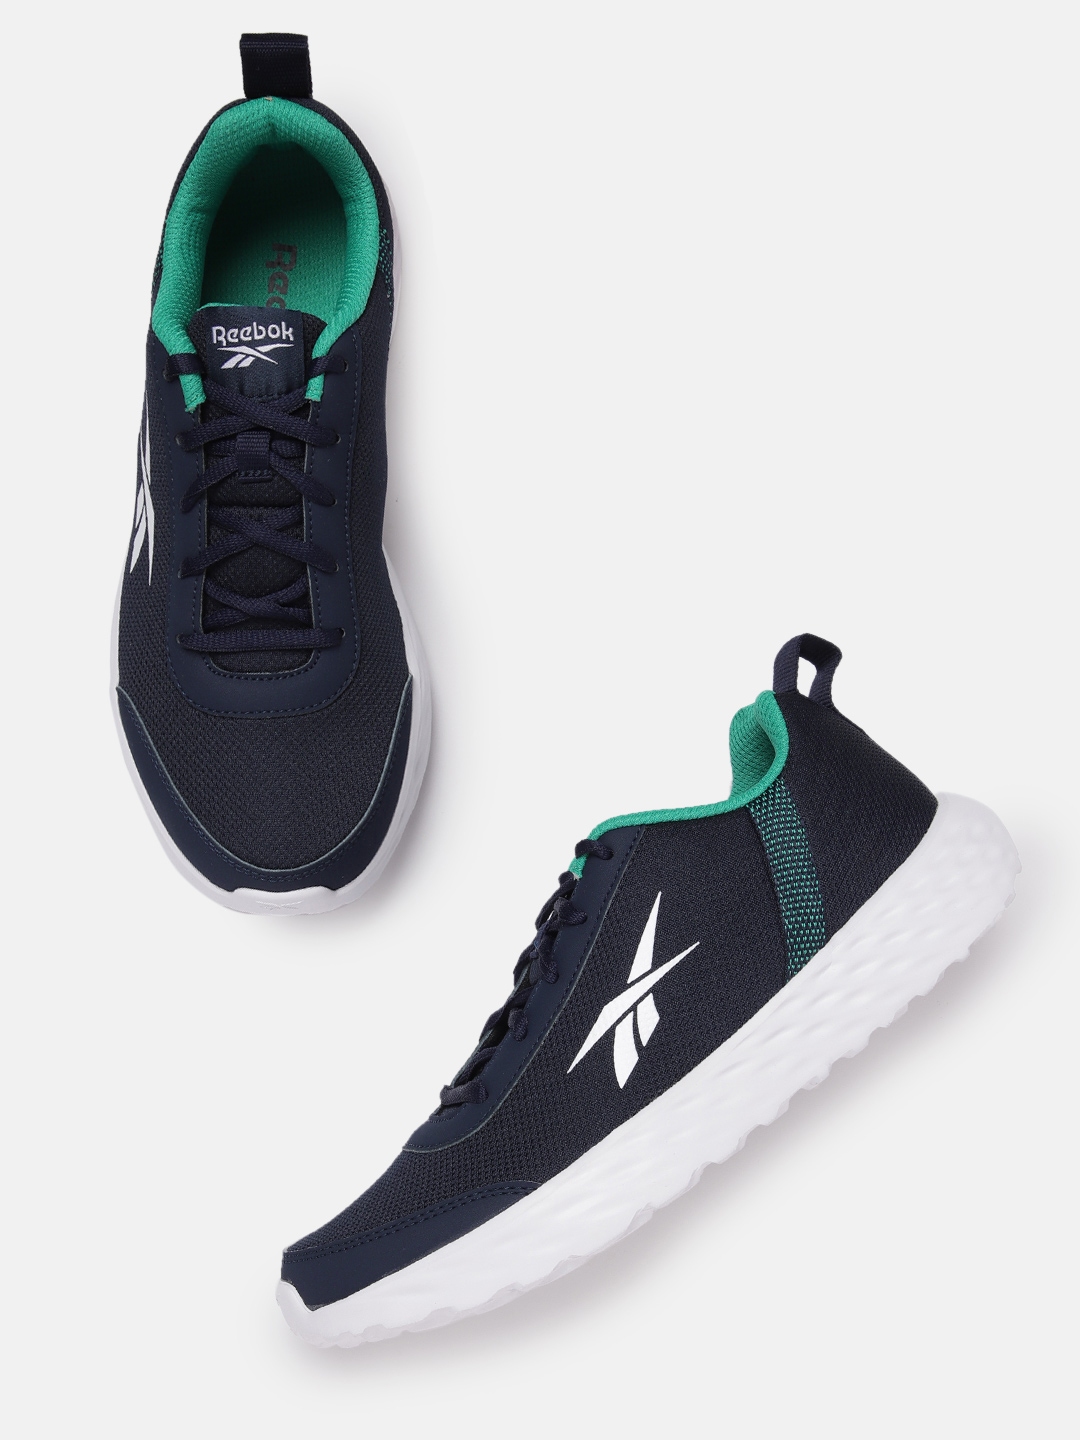 Method Branding : Used shoes for the new Reebok brand mark